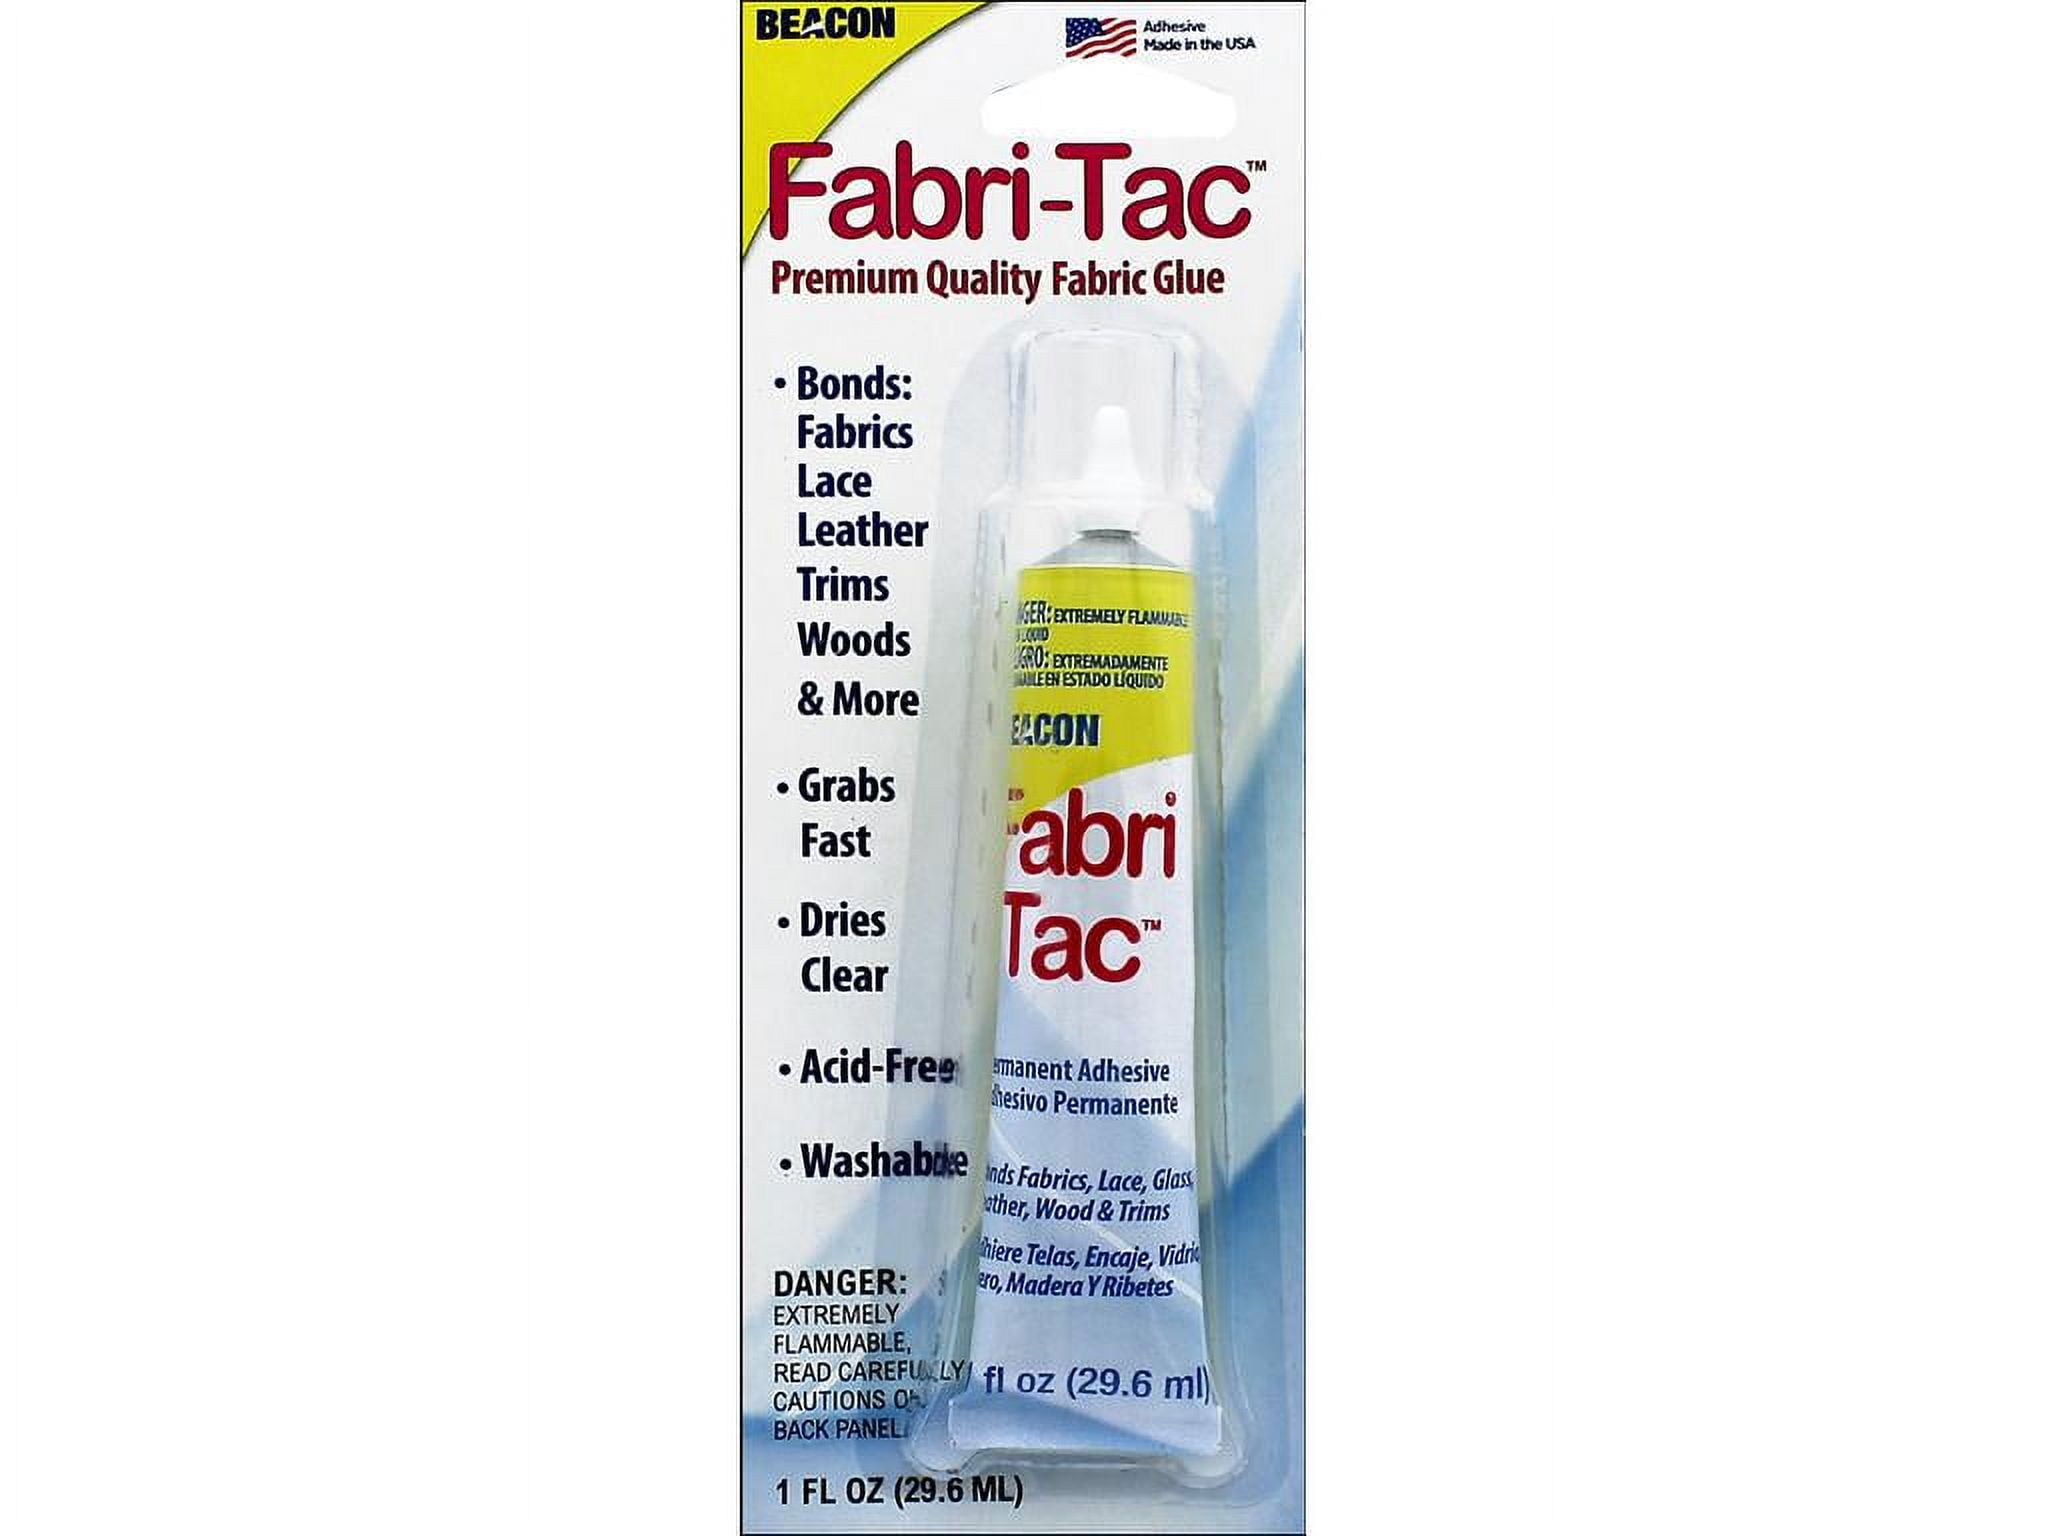 Beacon Fabri-Tac Permanent Adhesive, 4 oz